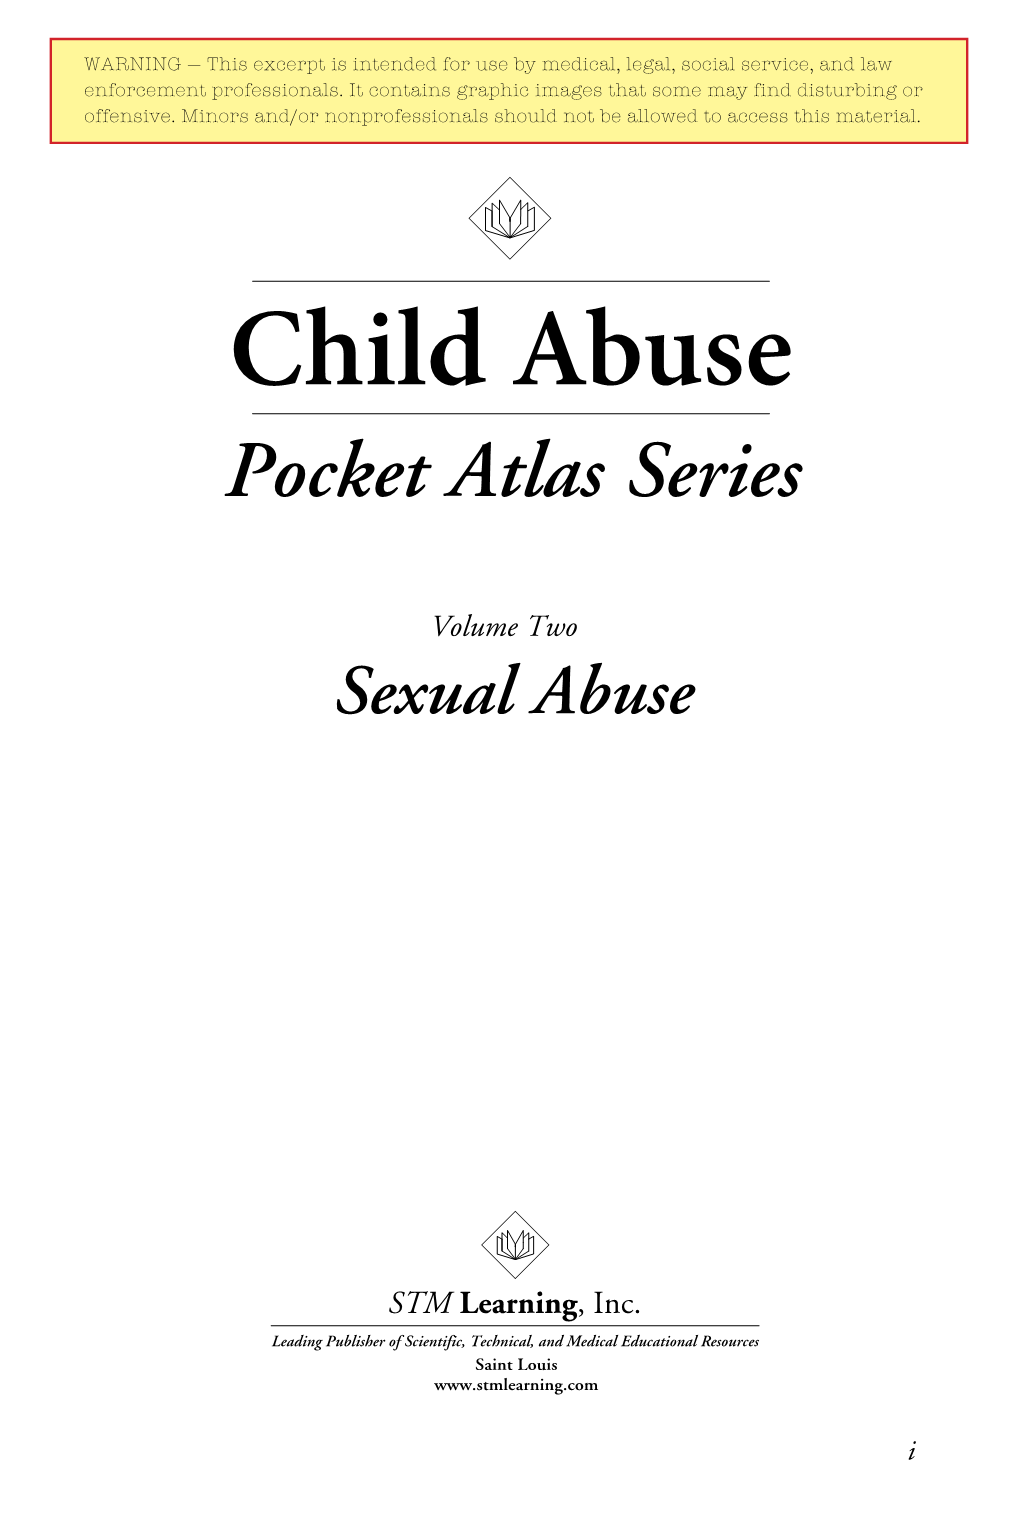 Child Abuse Pocket Atlas Series